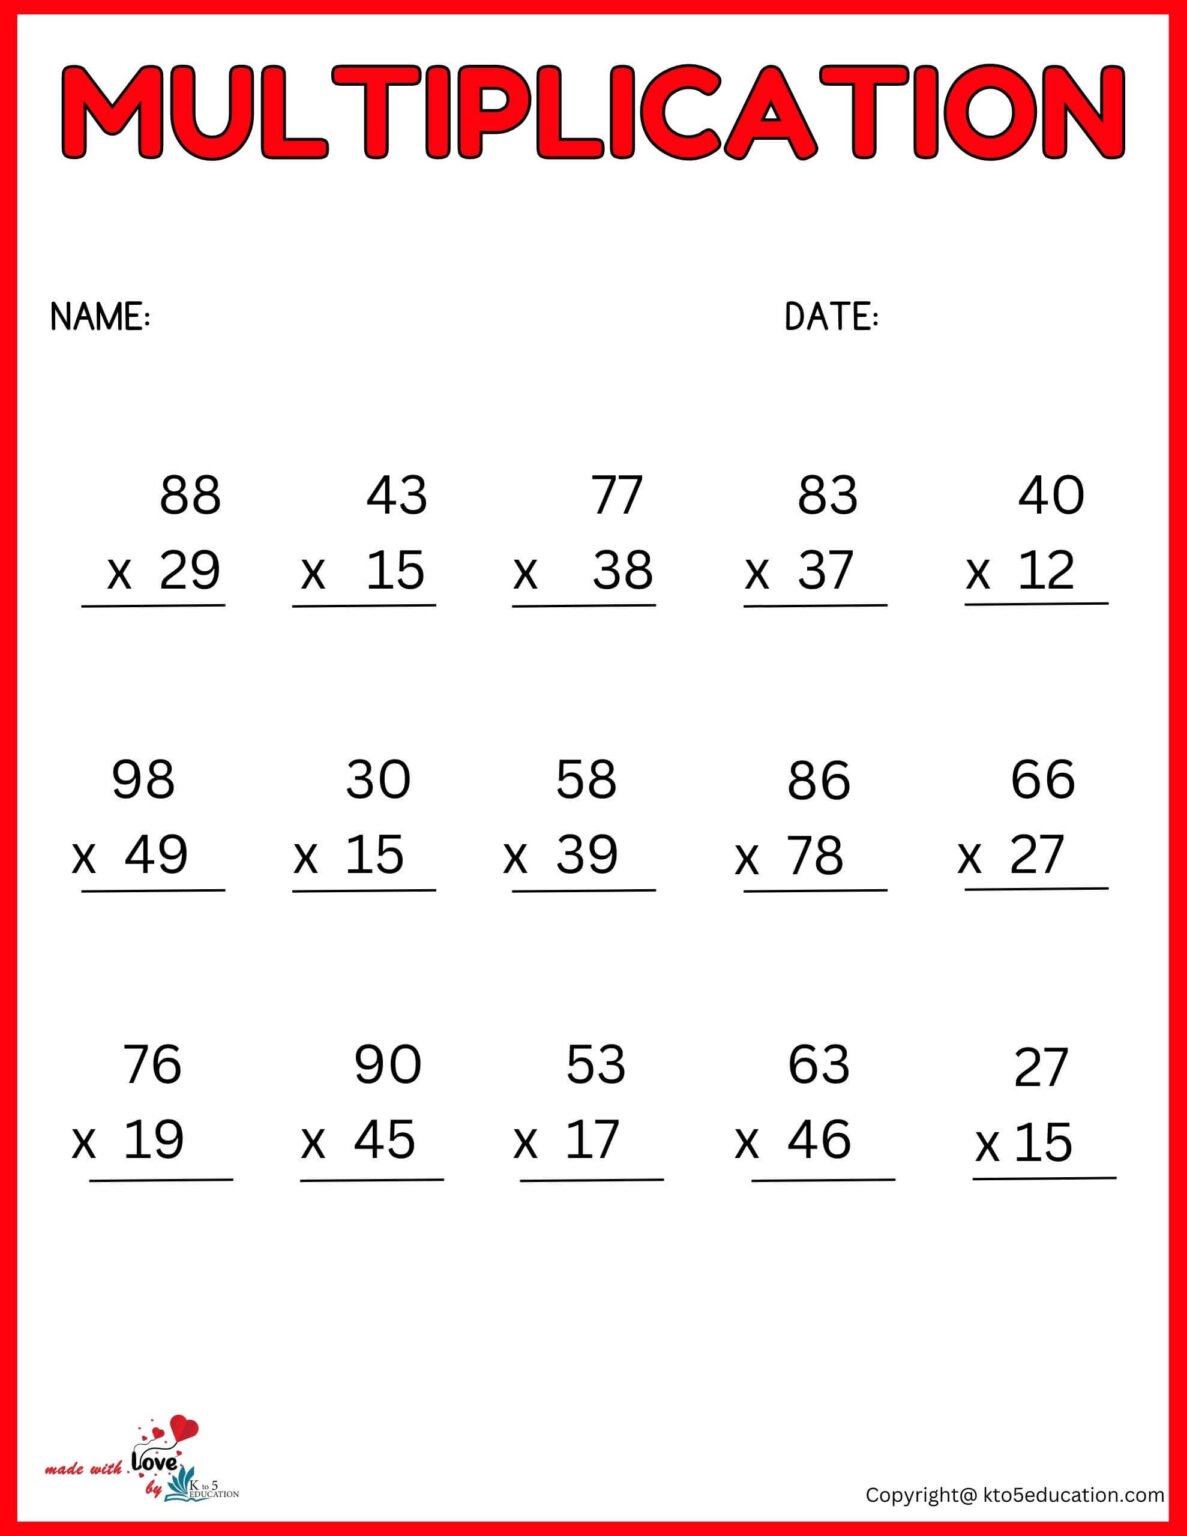 multiplication-worksheet-for-third-grade-free-download